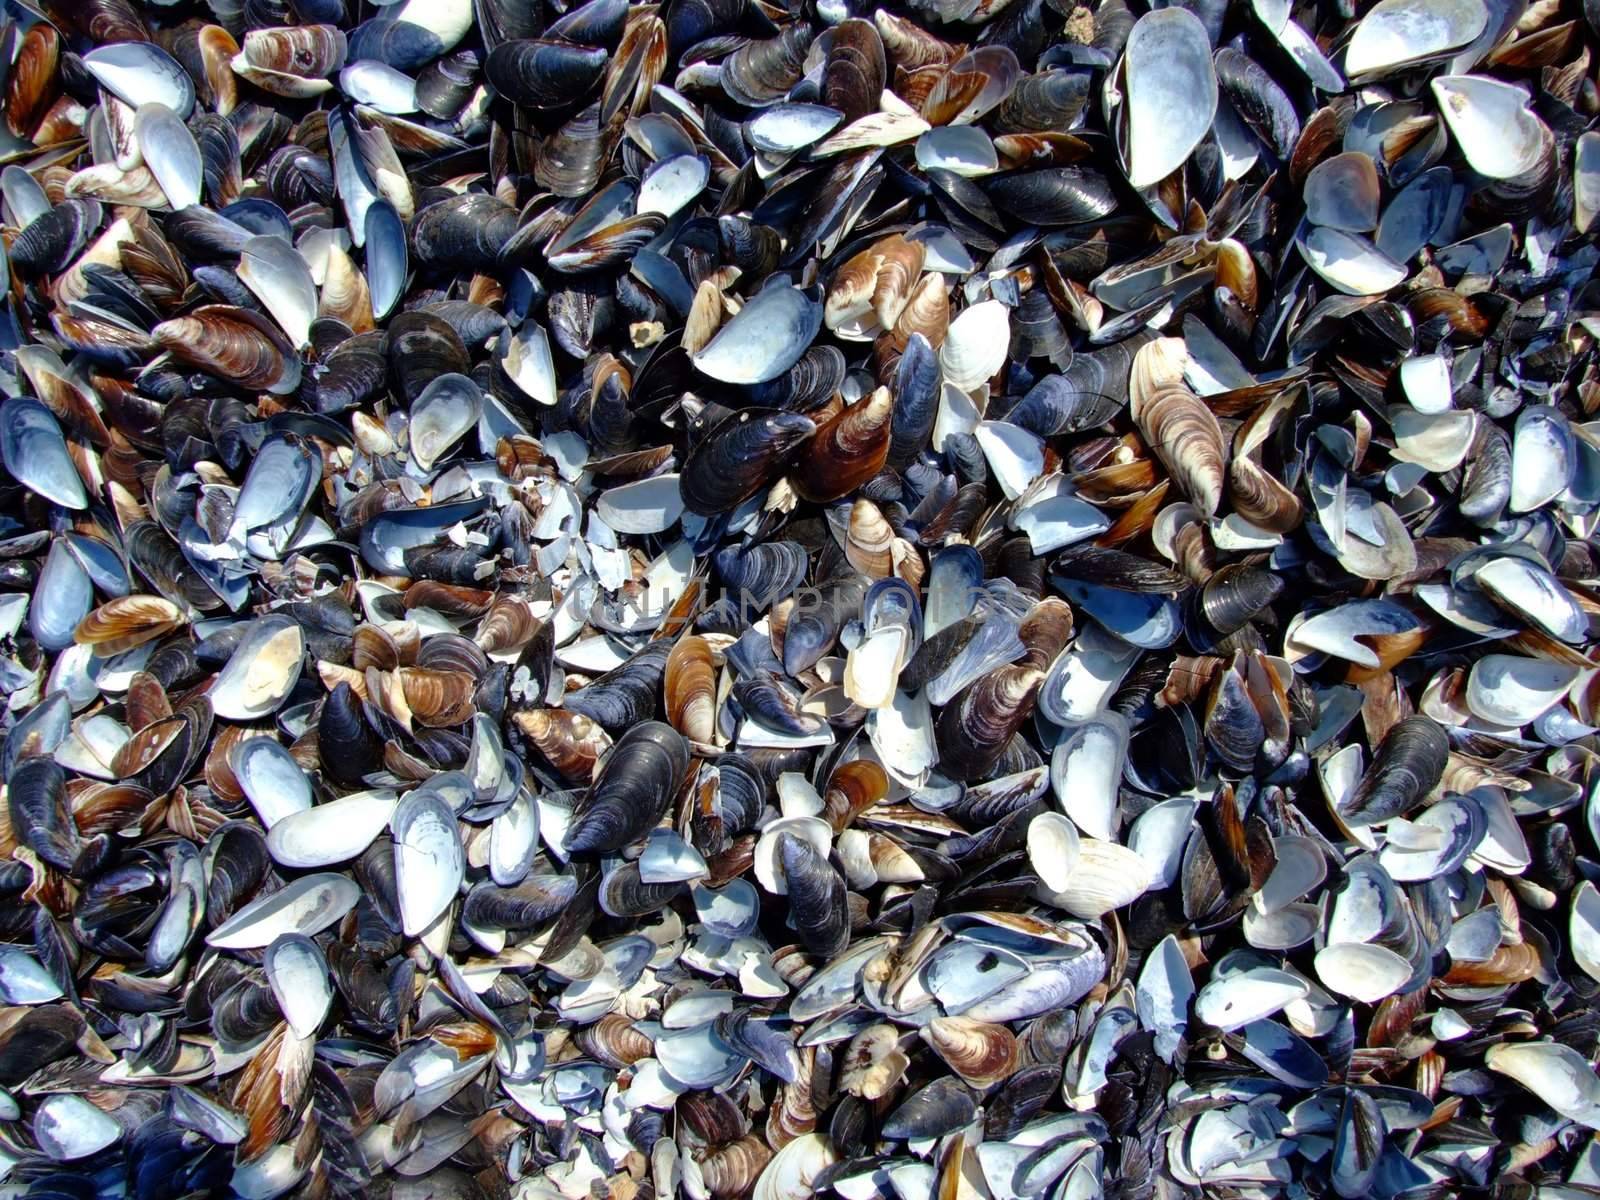 cockleshells on the beach of the Black Sea